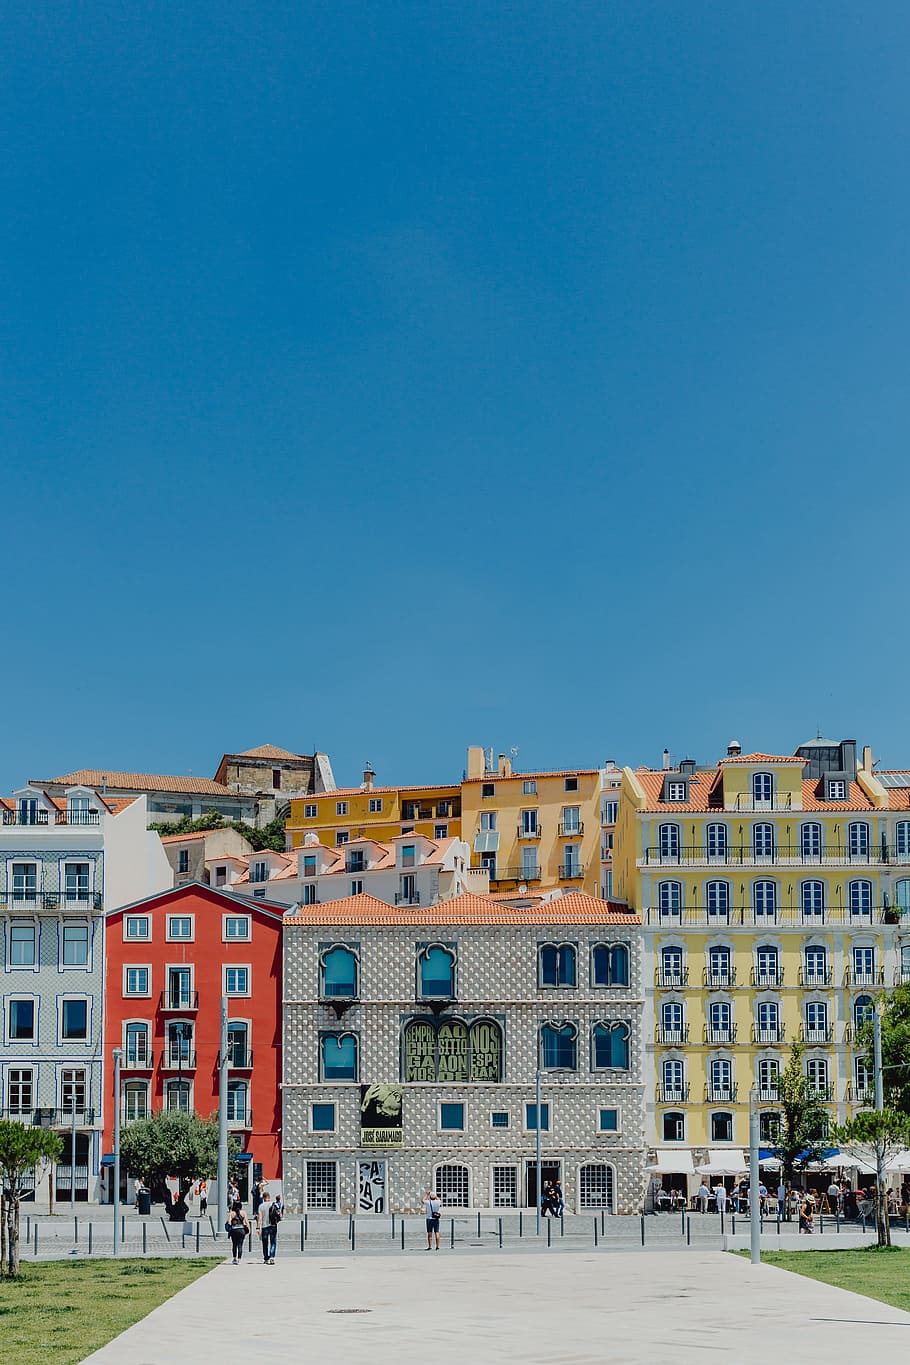 lisbon architecture, portugal, architecture, buildings, town, city, Europe, facade, colorful, portugal, lisbon